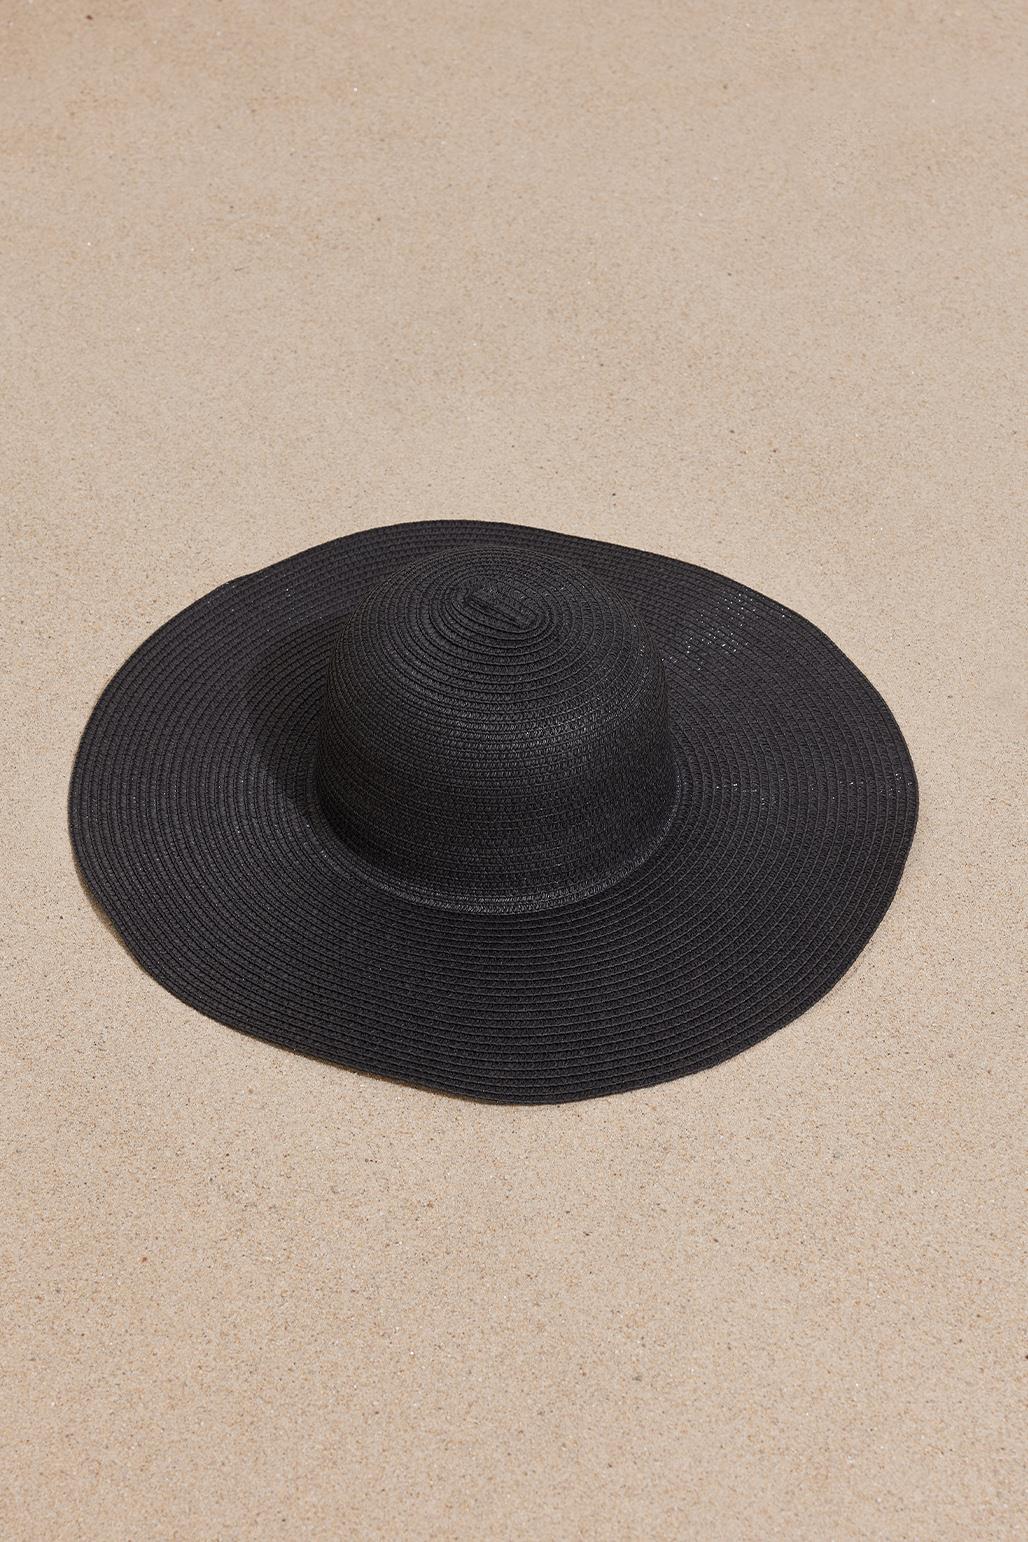 Straw Beach Hat Black